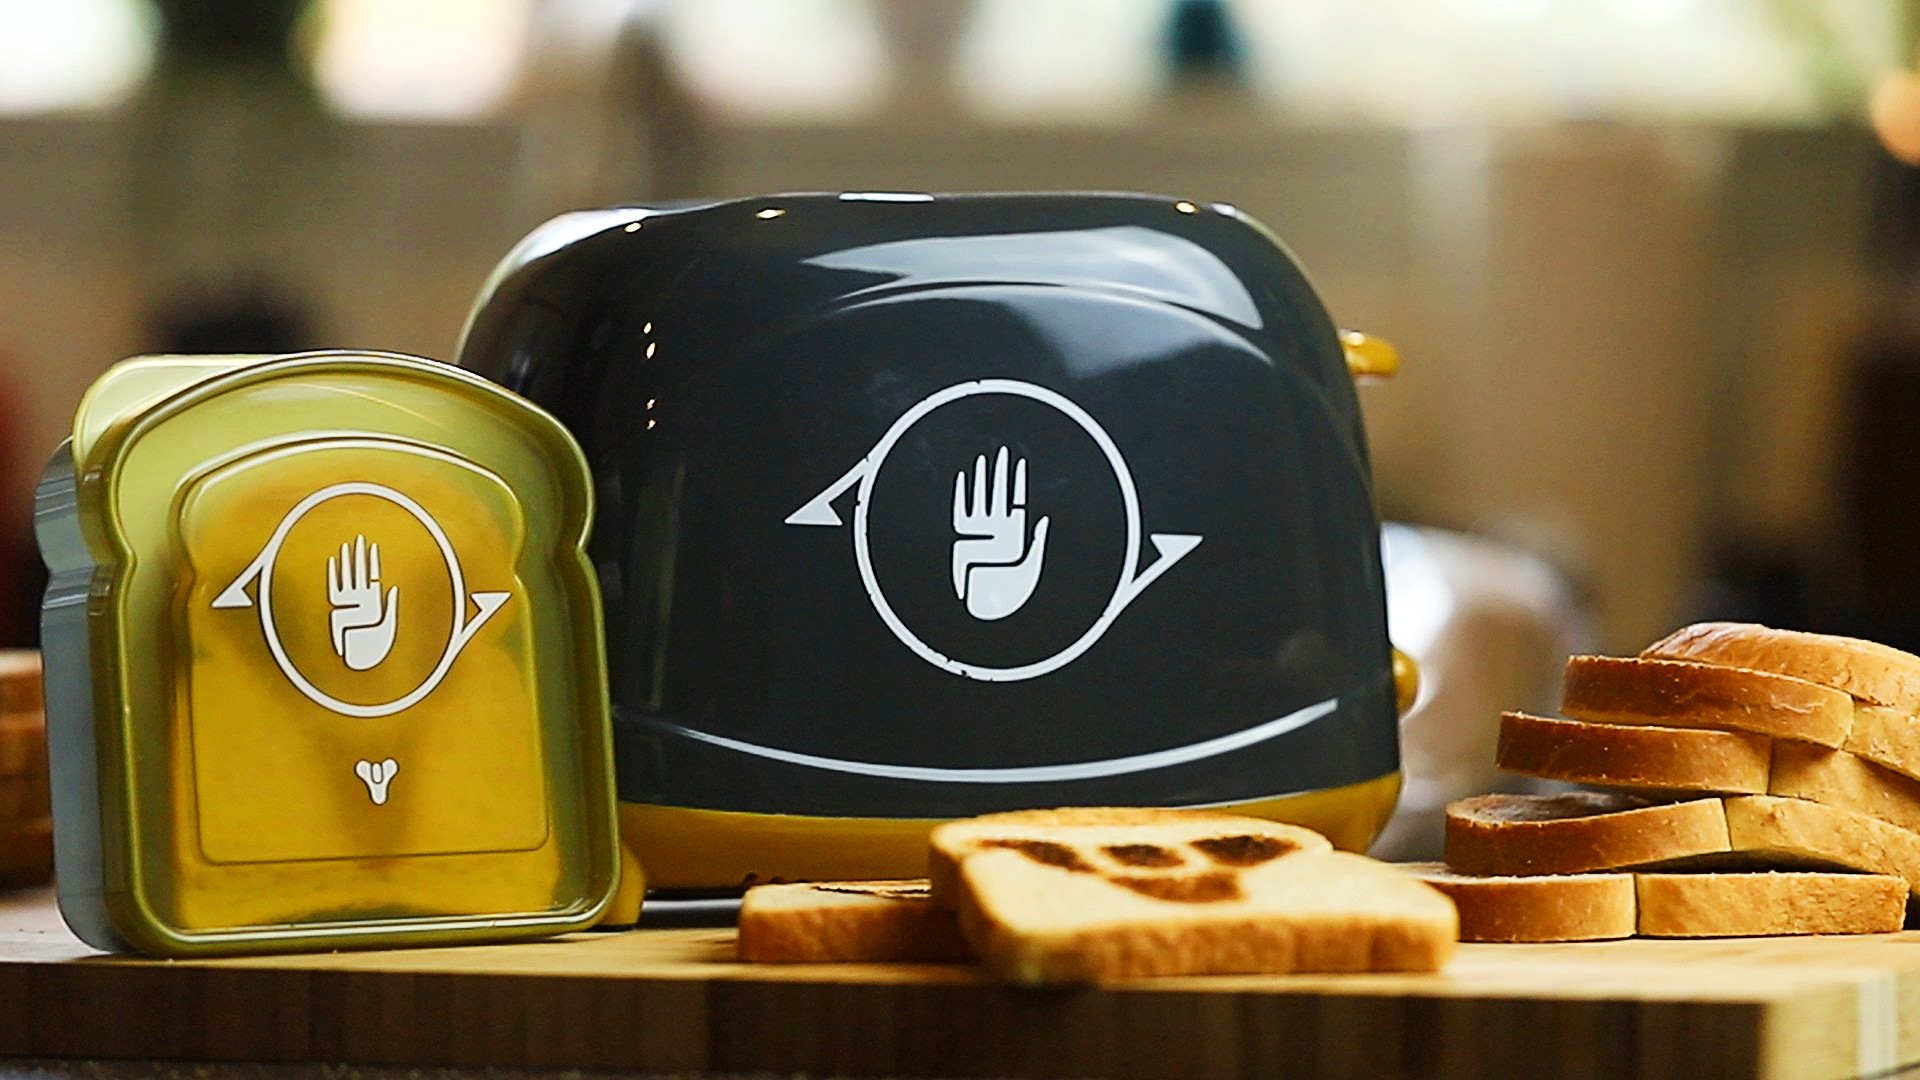 I-Destiny 2 Toaster